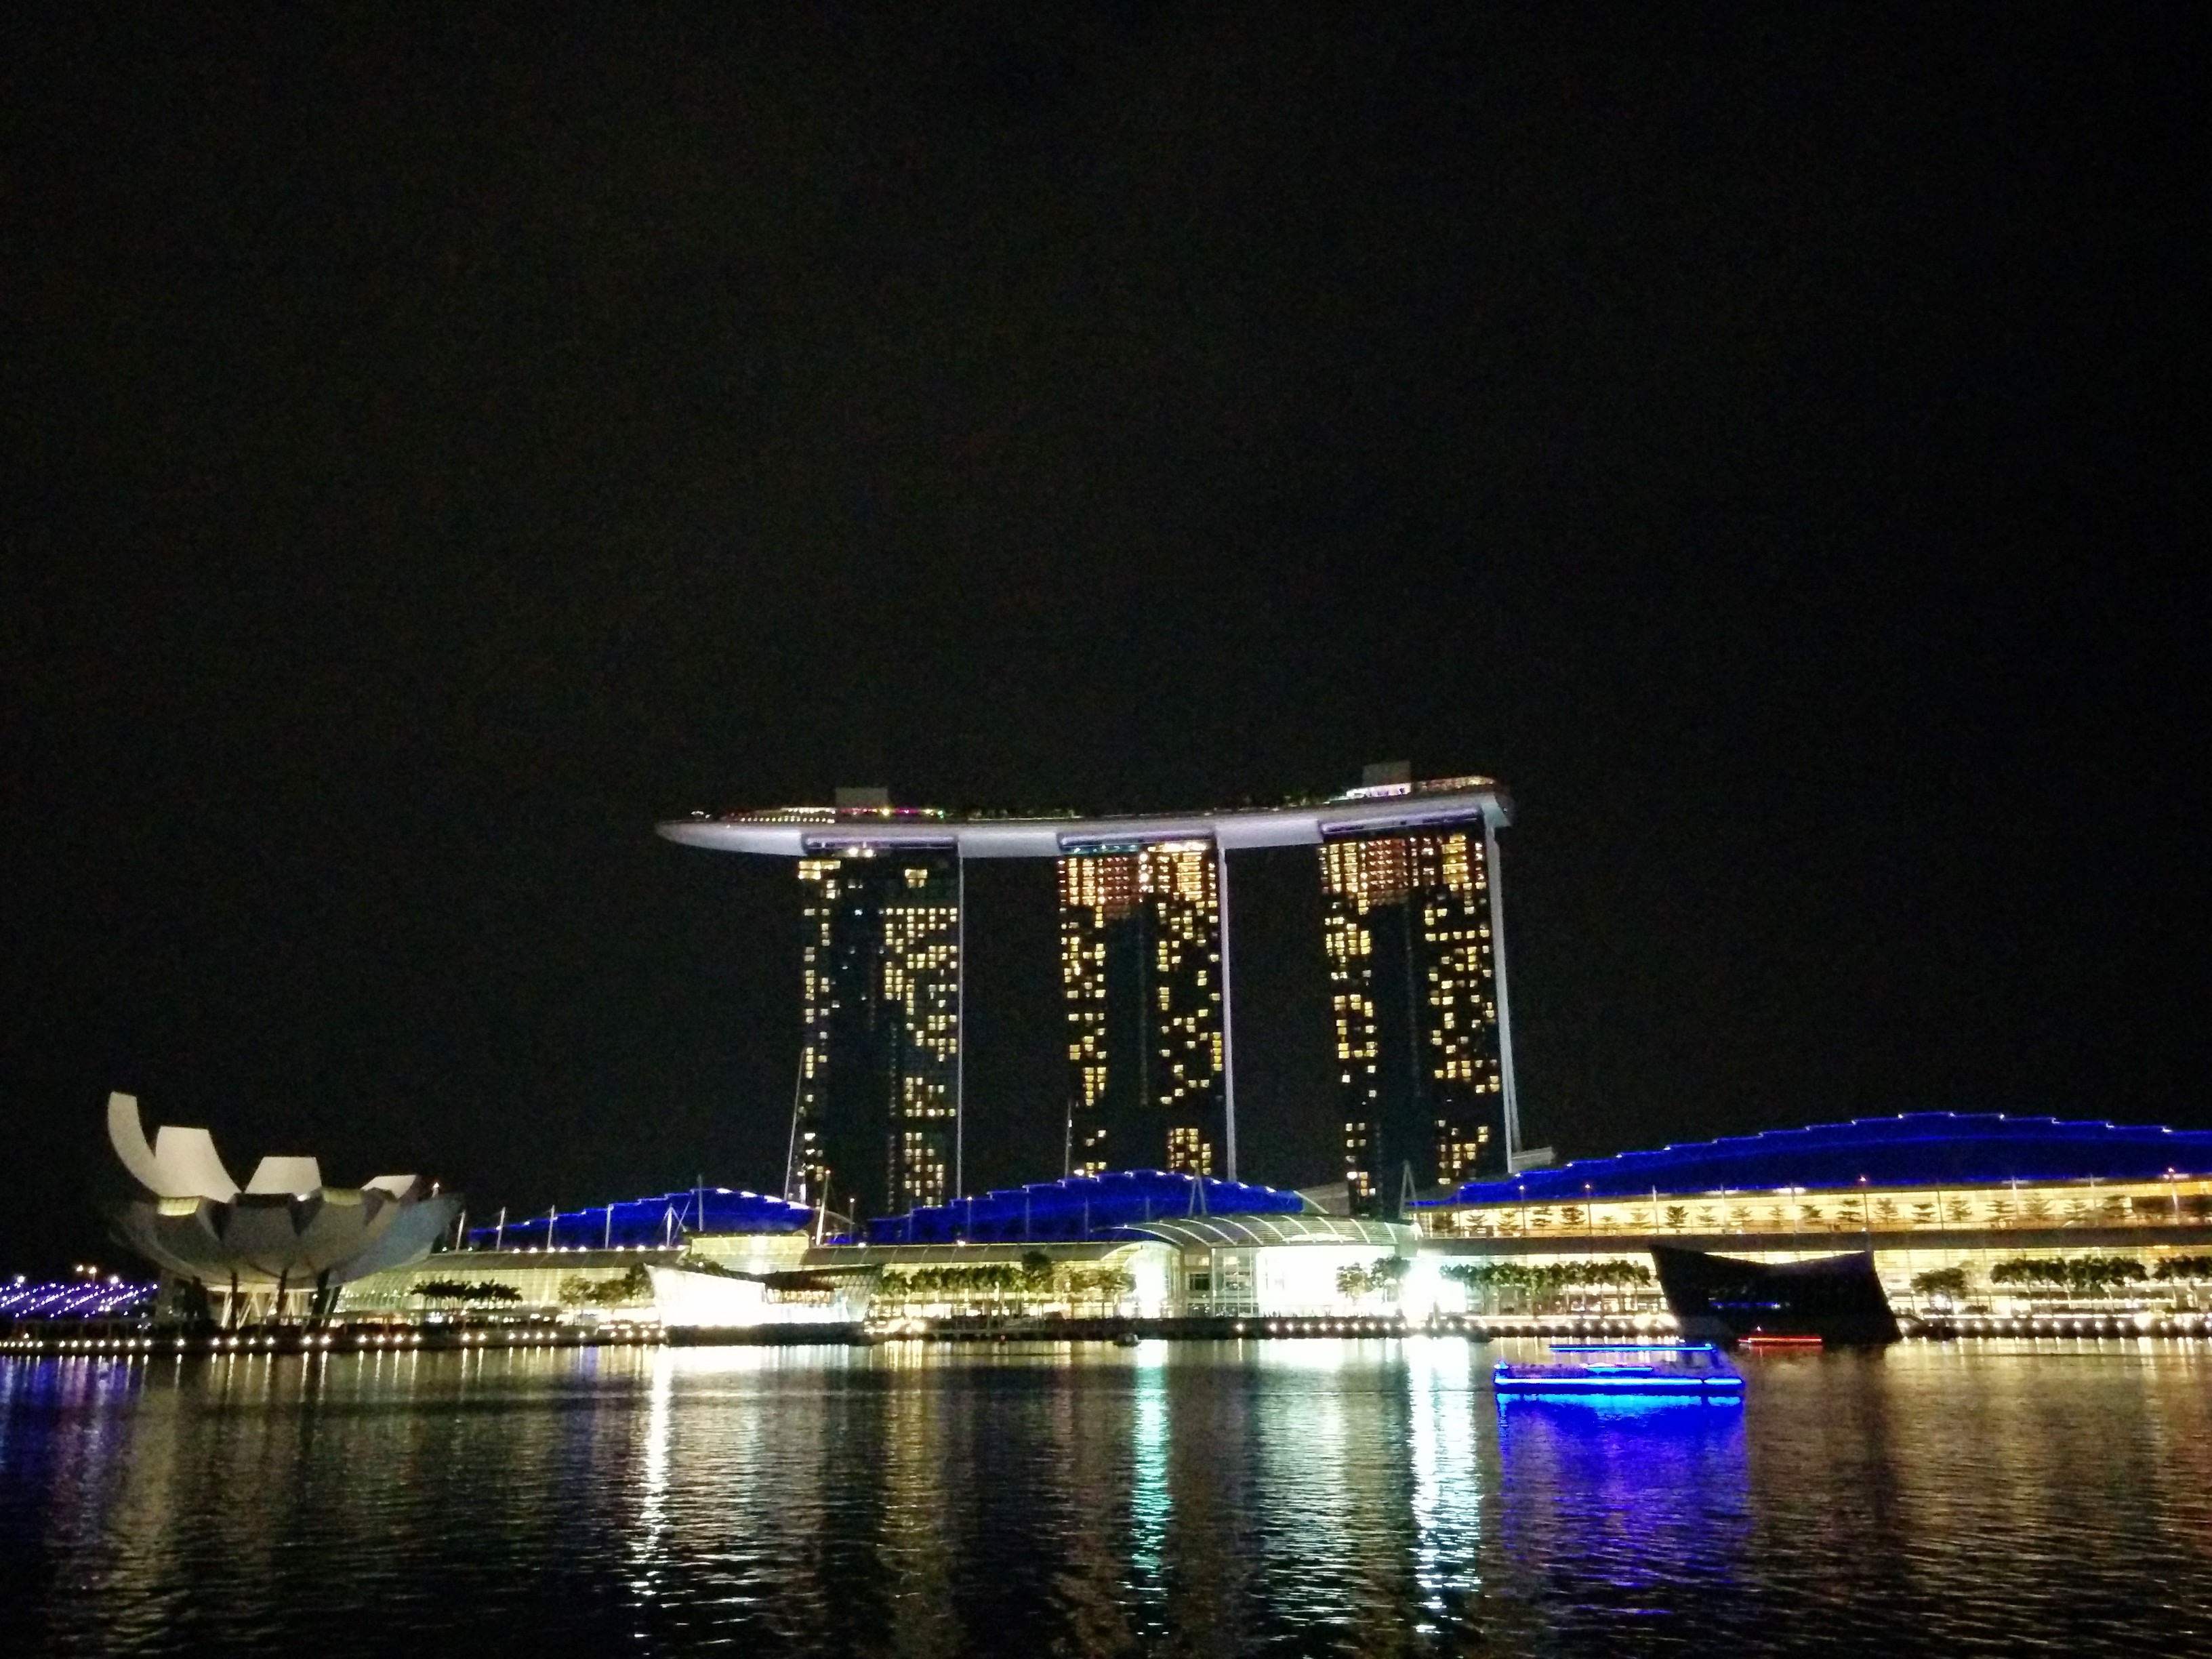 Marina Bay Sands Singapore at night